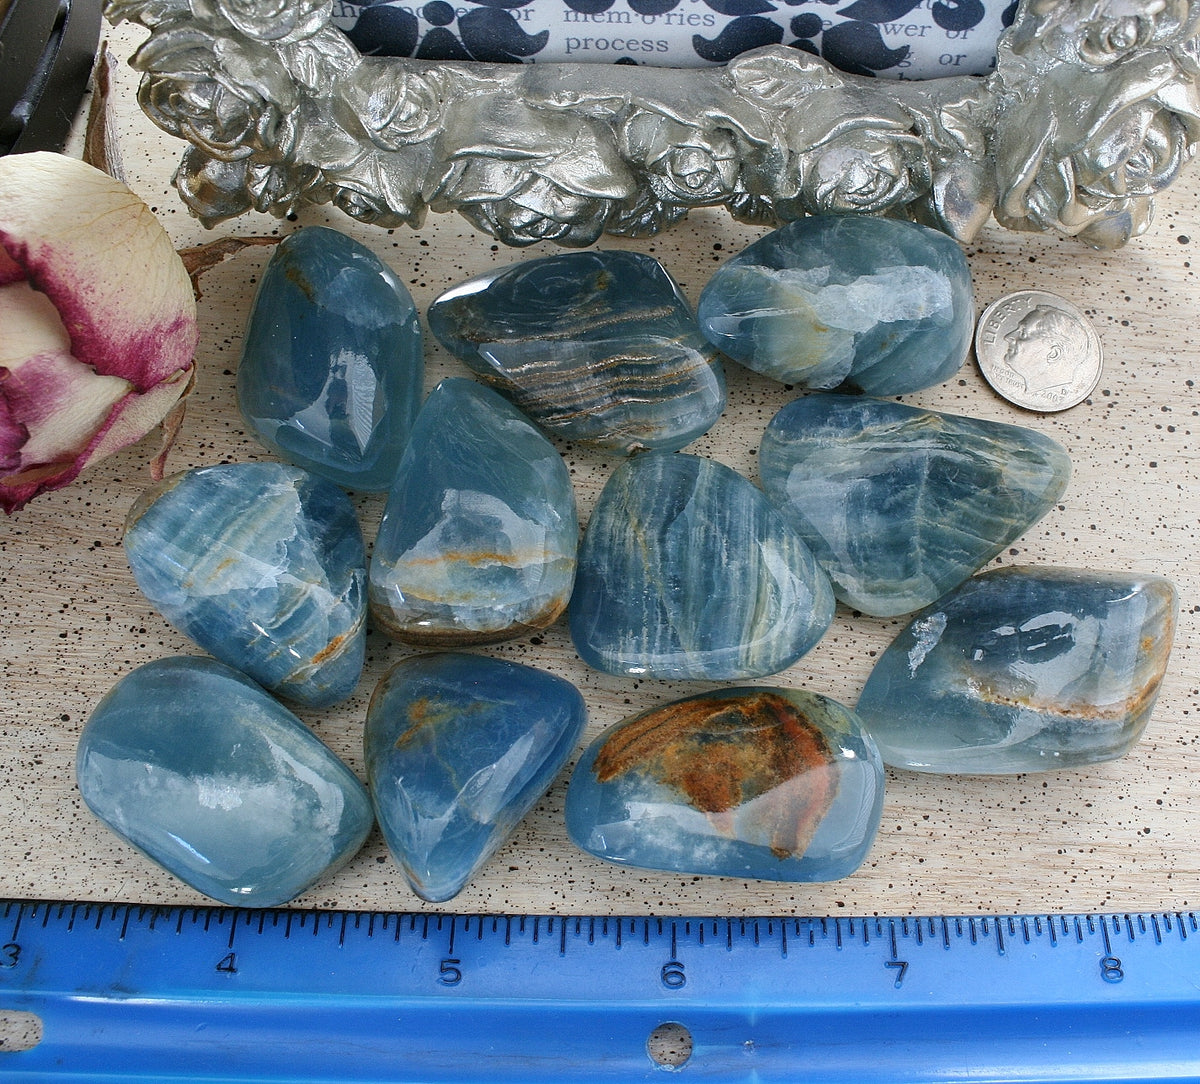 Blue Calcite / Blue Onyx Tumbled Stone from Argentina, also called Lemurian Aquatine Calcite, TUM2